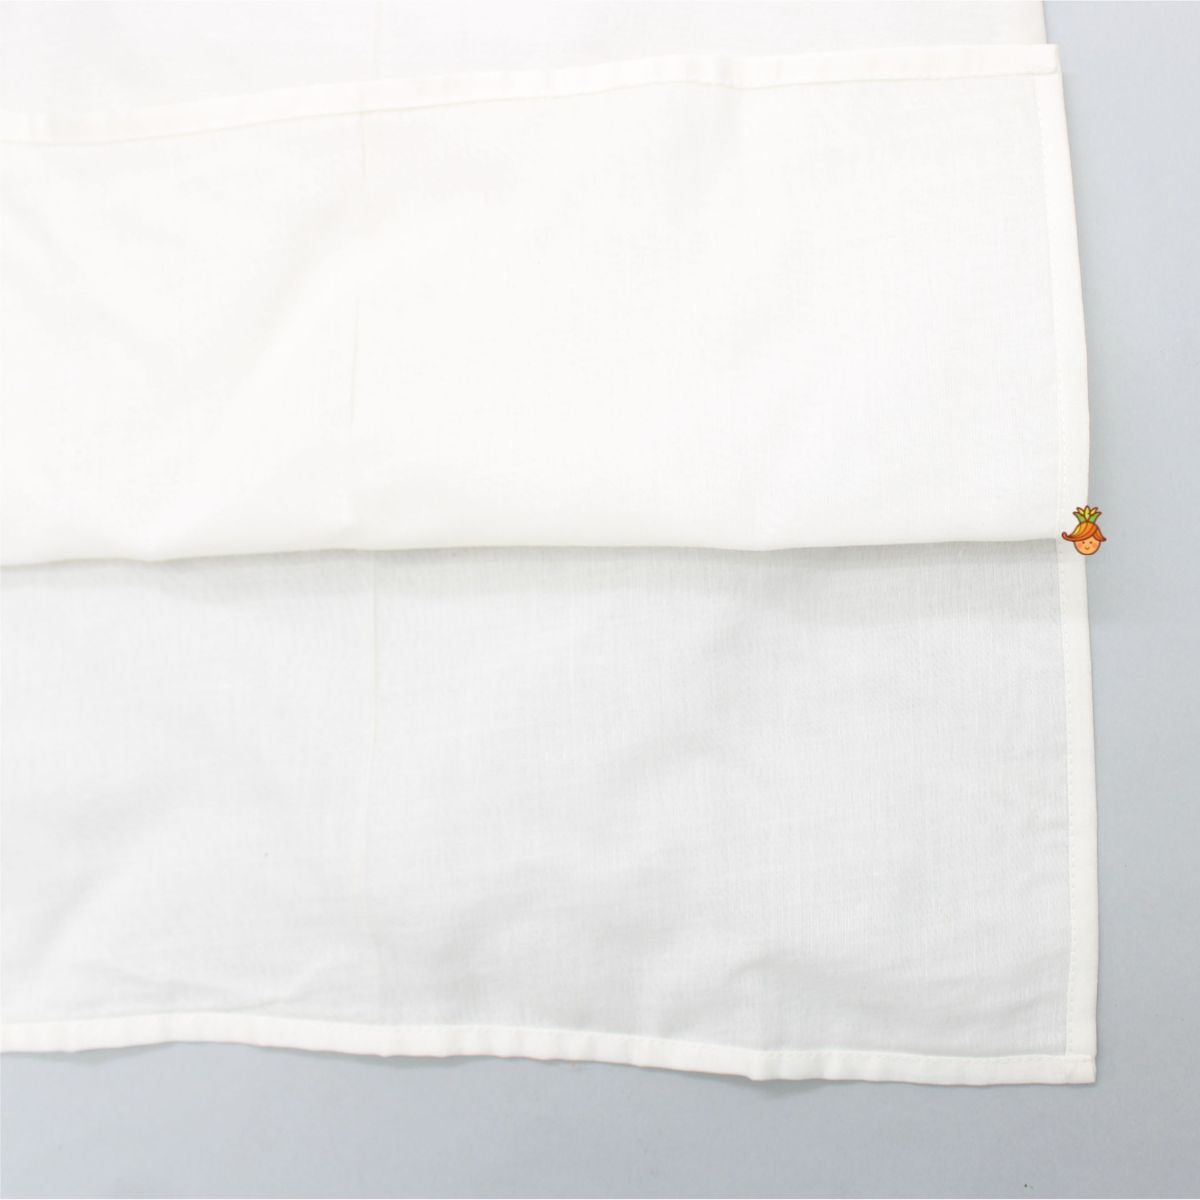 Football Embroidered Patch Pocket Detail White Kurta